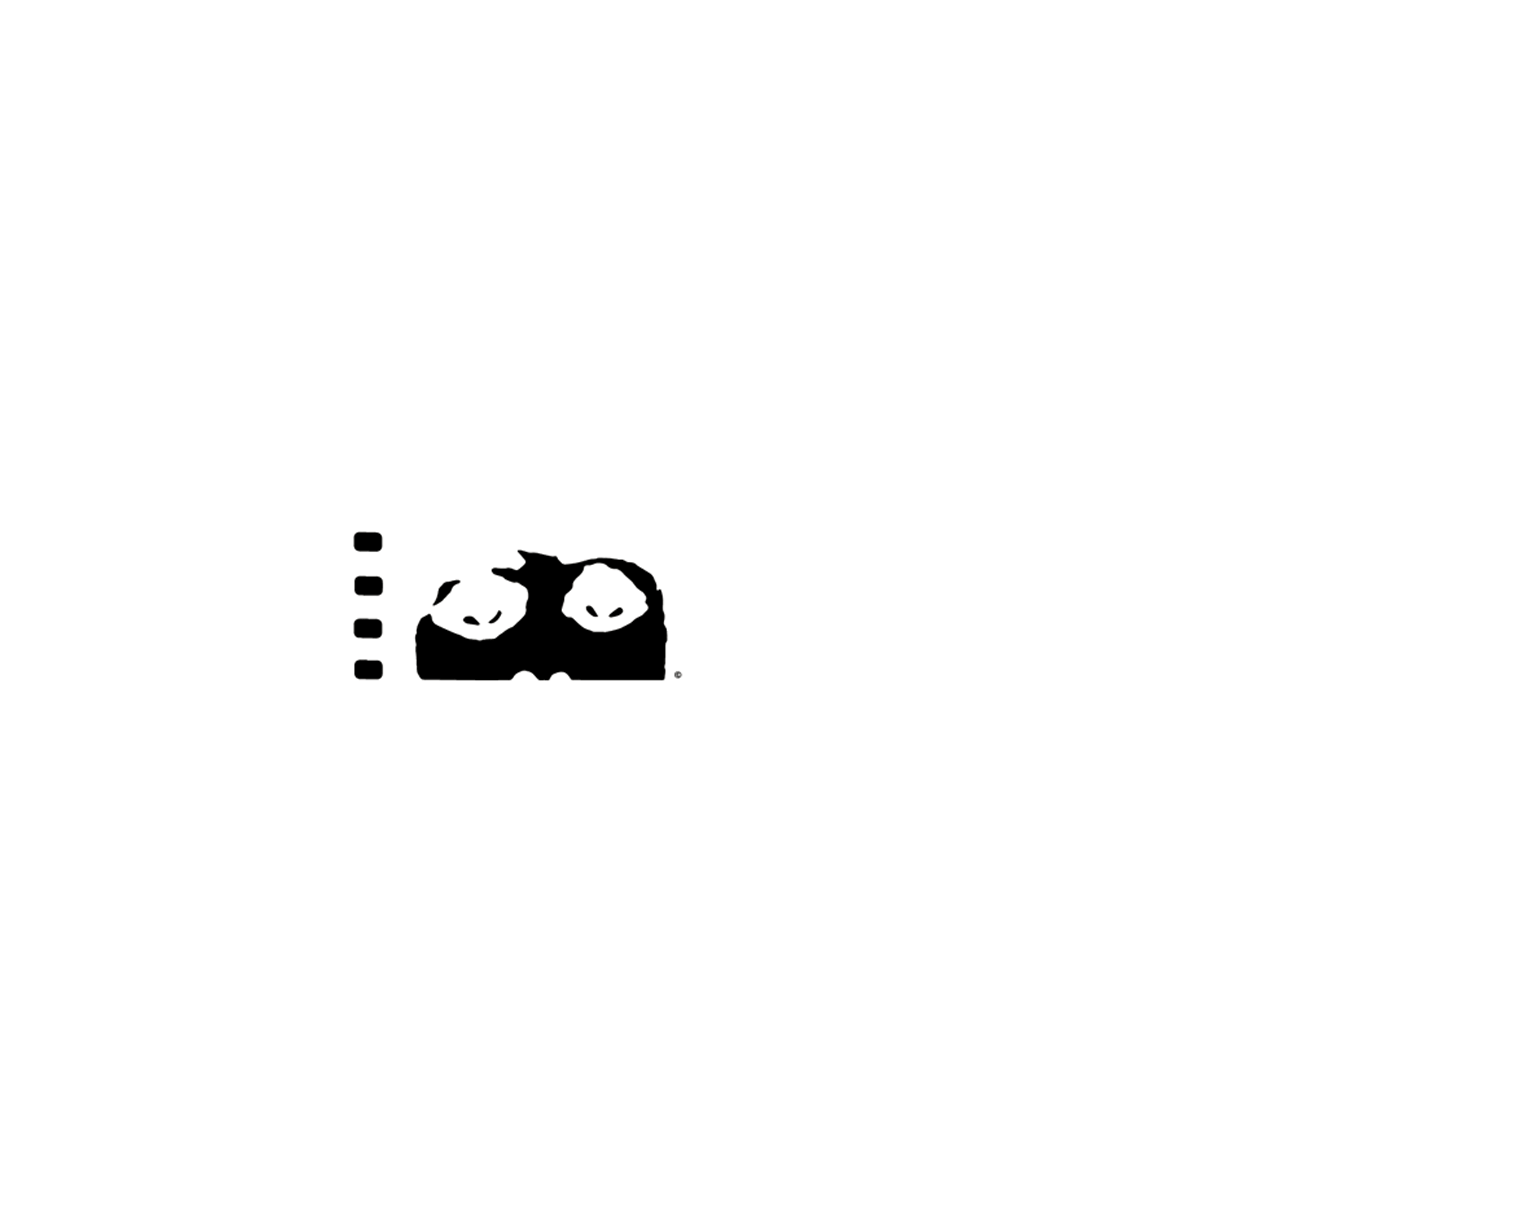 CHICAGO FILM FESTIVAL